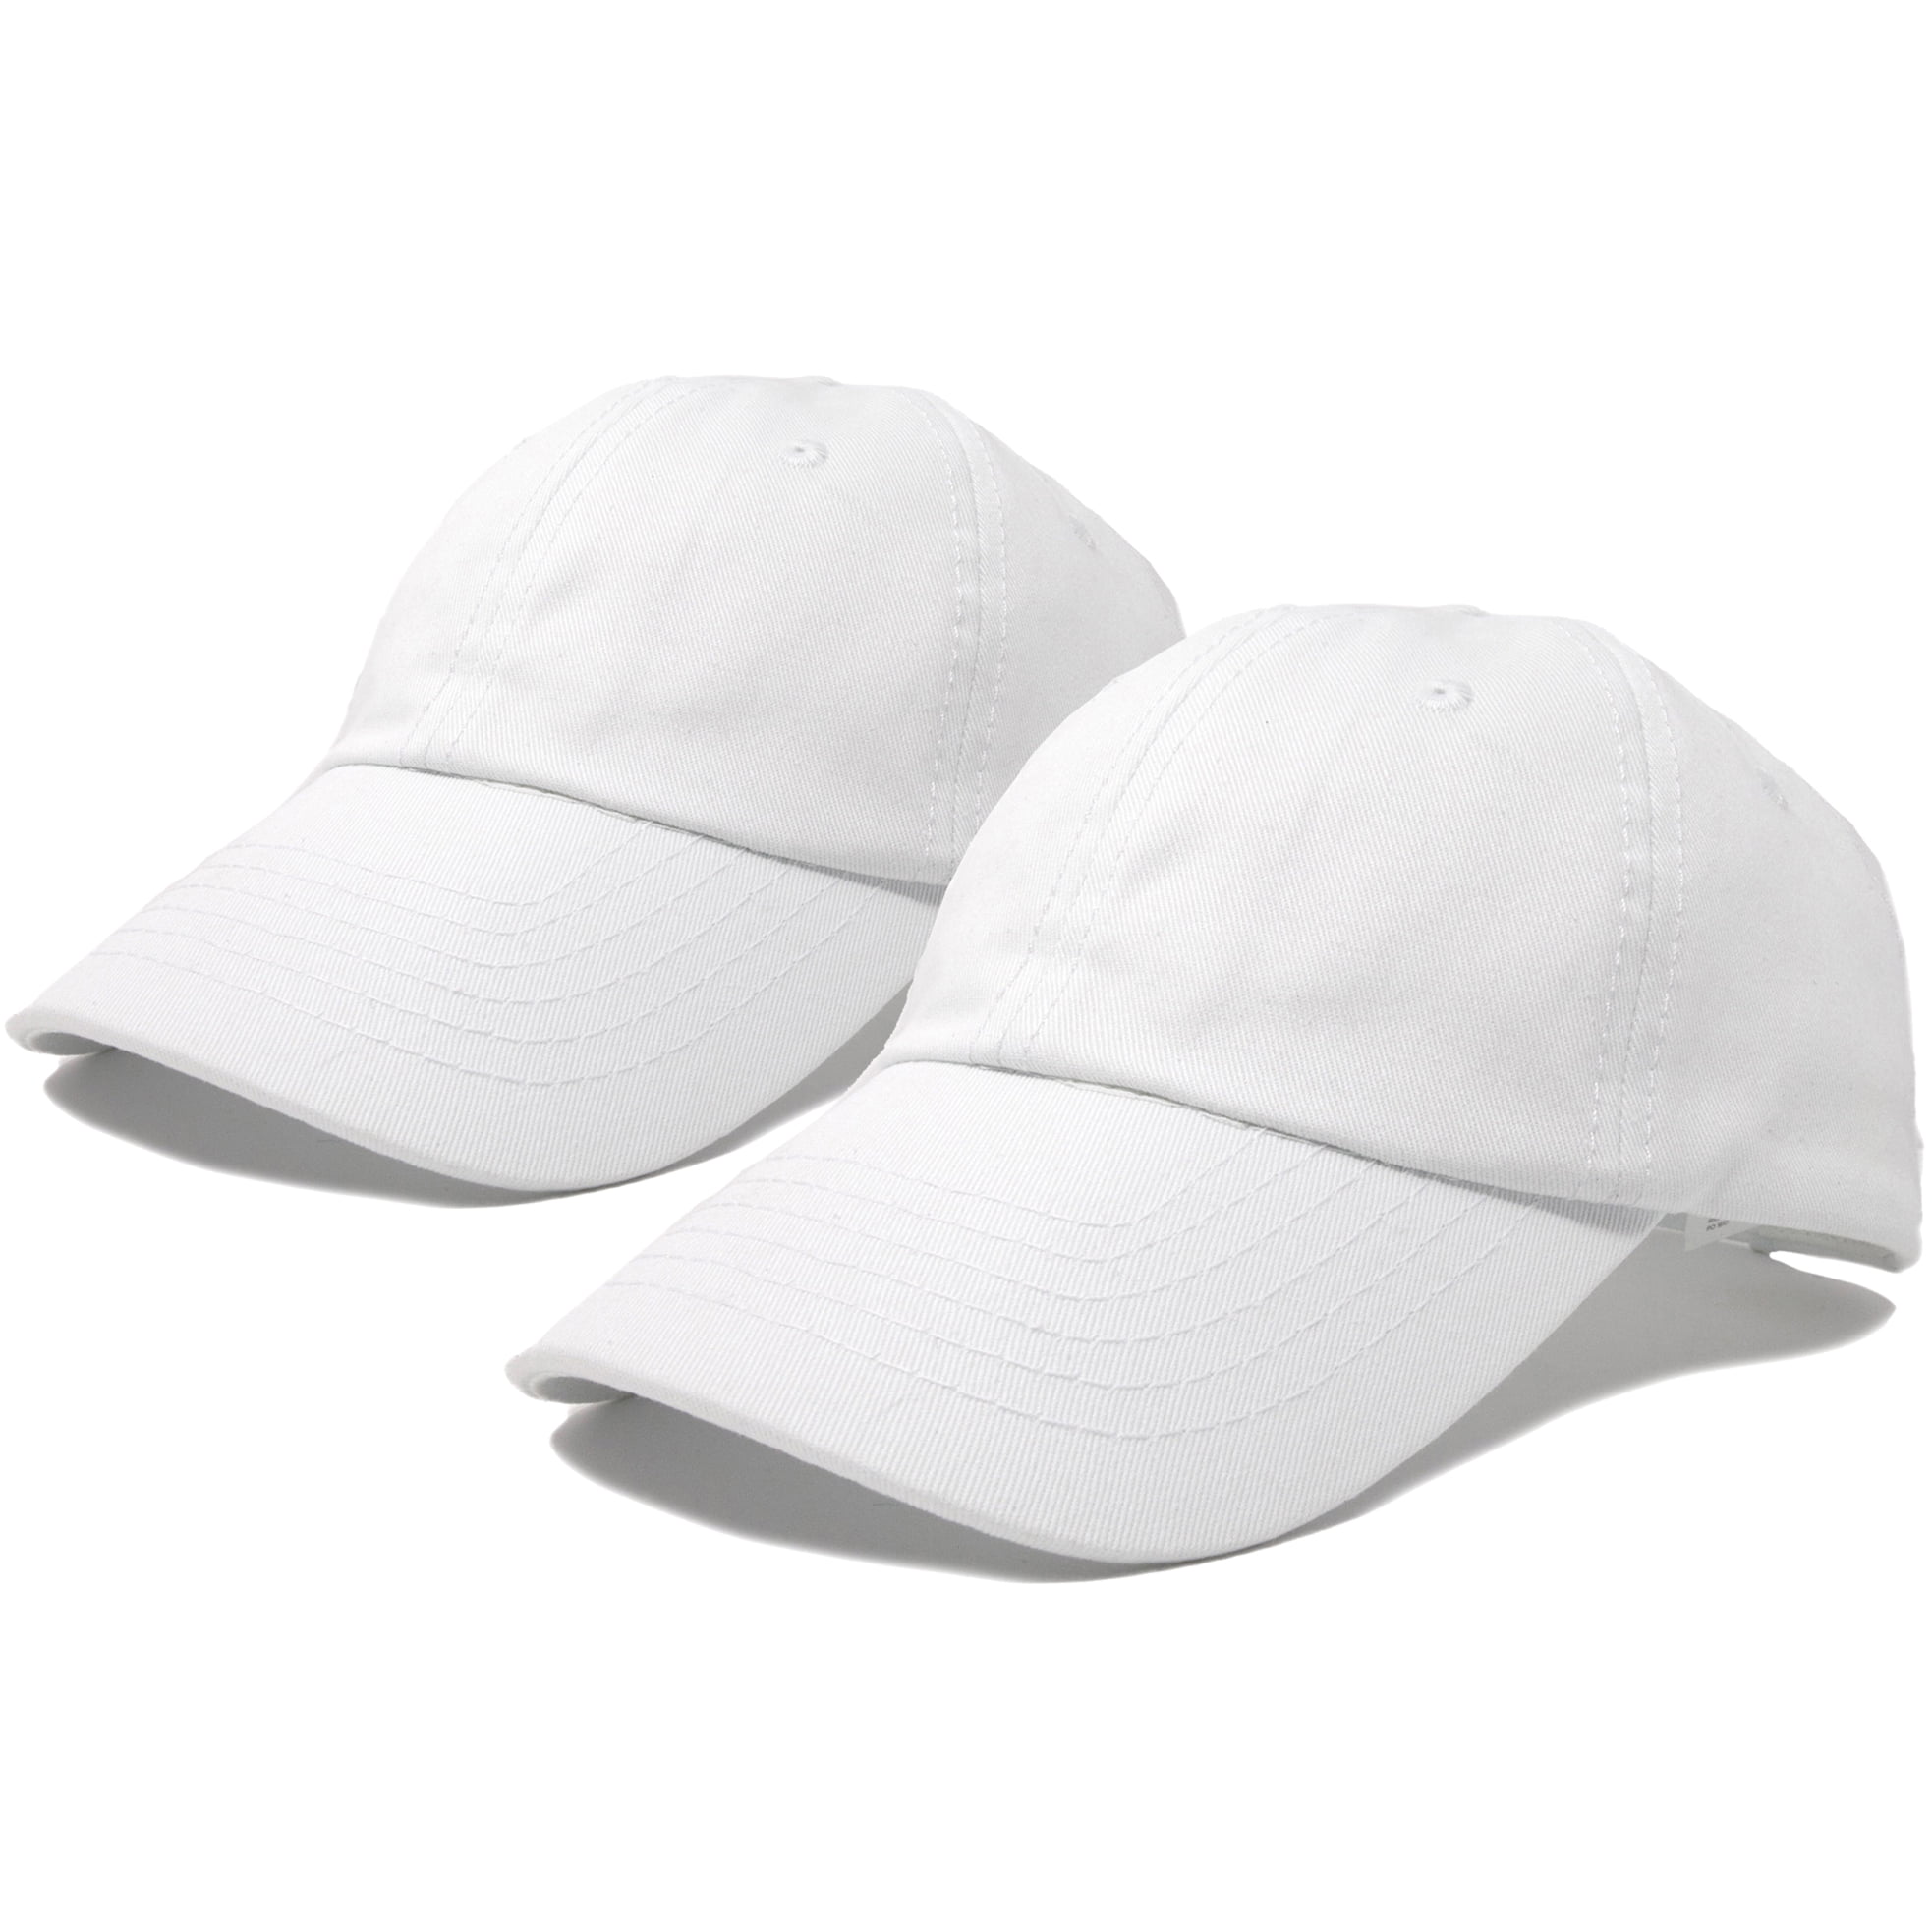 Cheap hats: Stylish Headwear on a Budget插图4